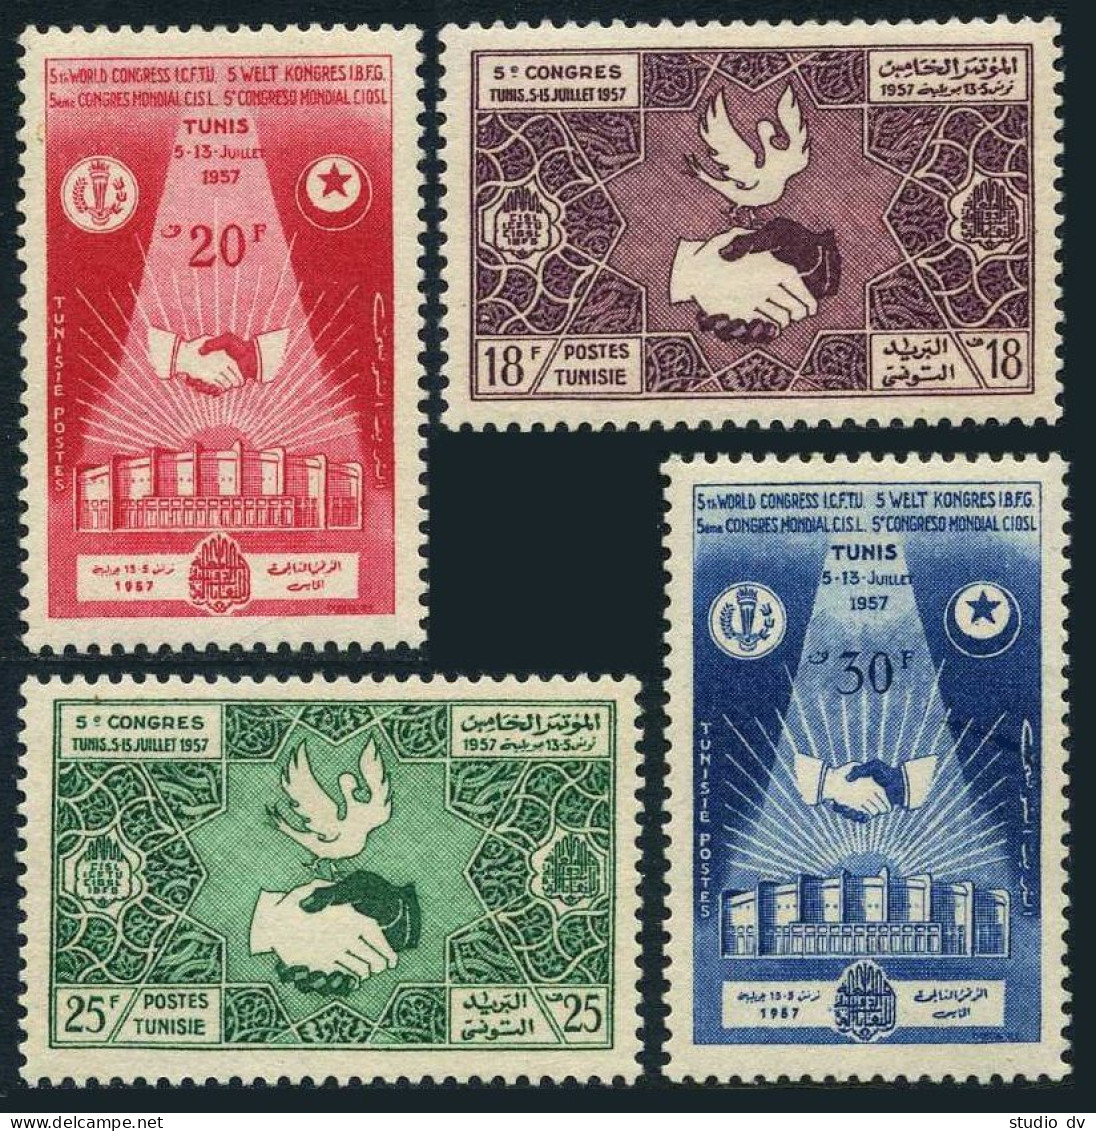 Tunisia 308-311, MNH. Mi 485-488. Federation Of Trade Unions, 1957. Dove, - Tunisia